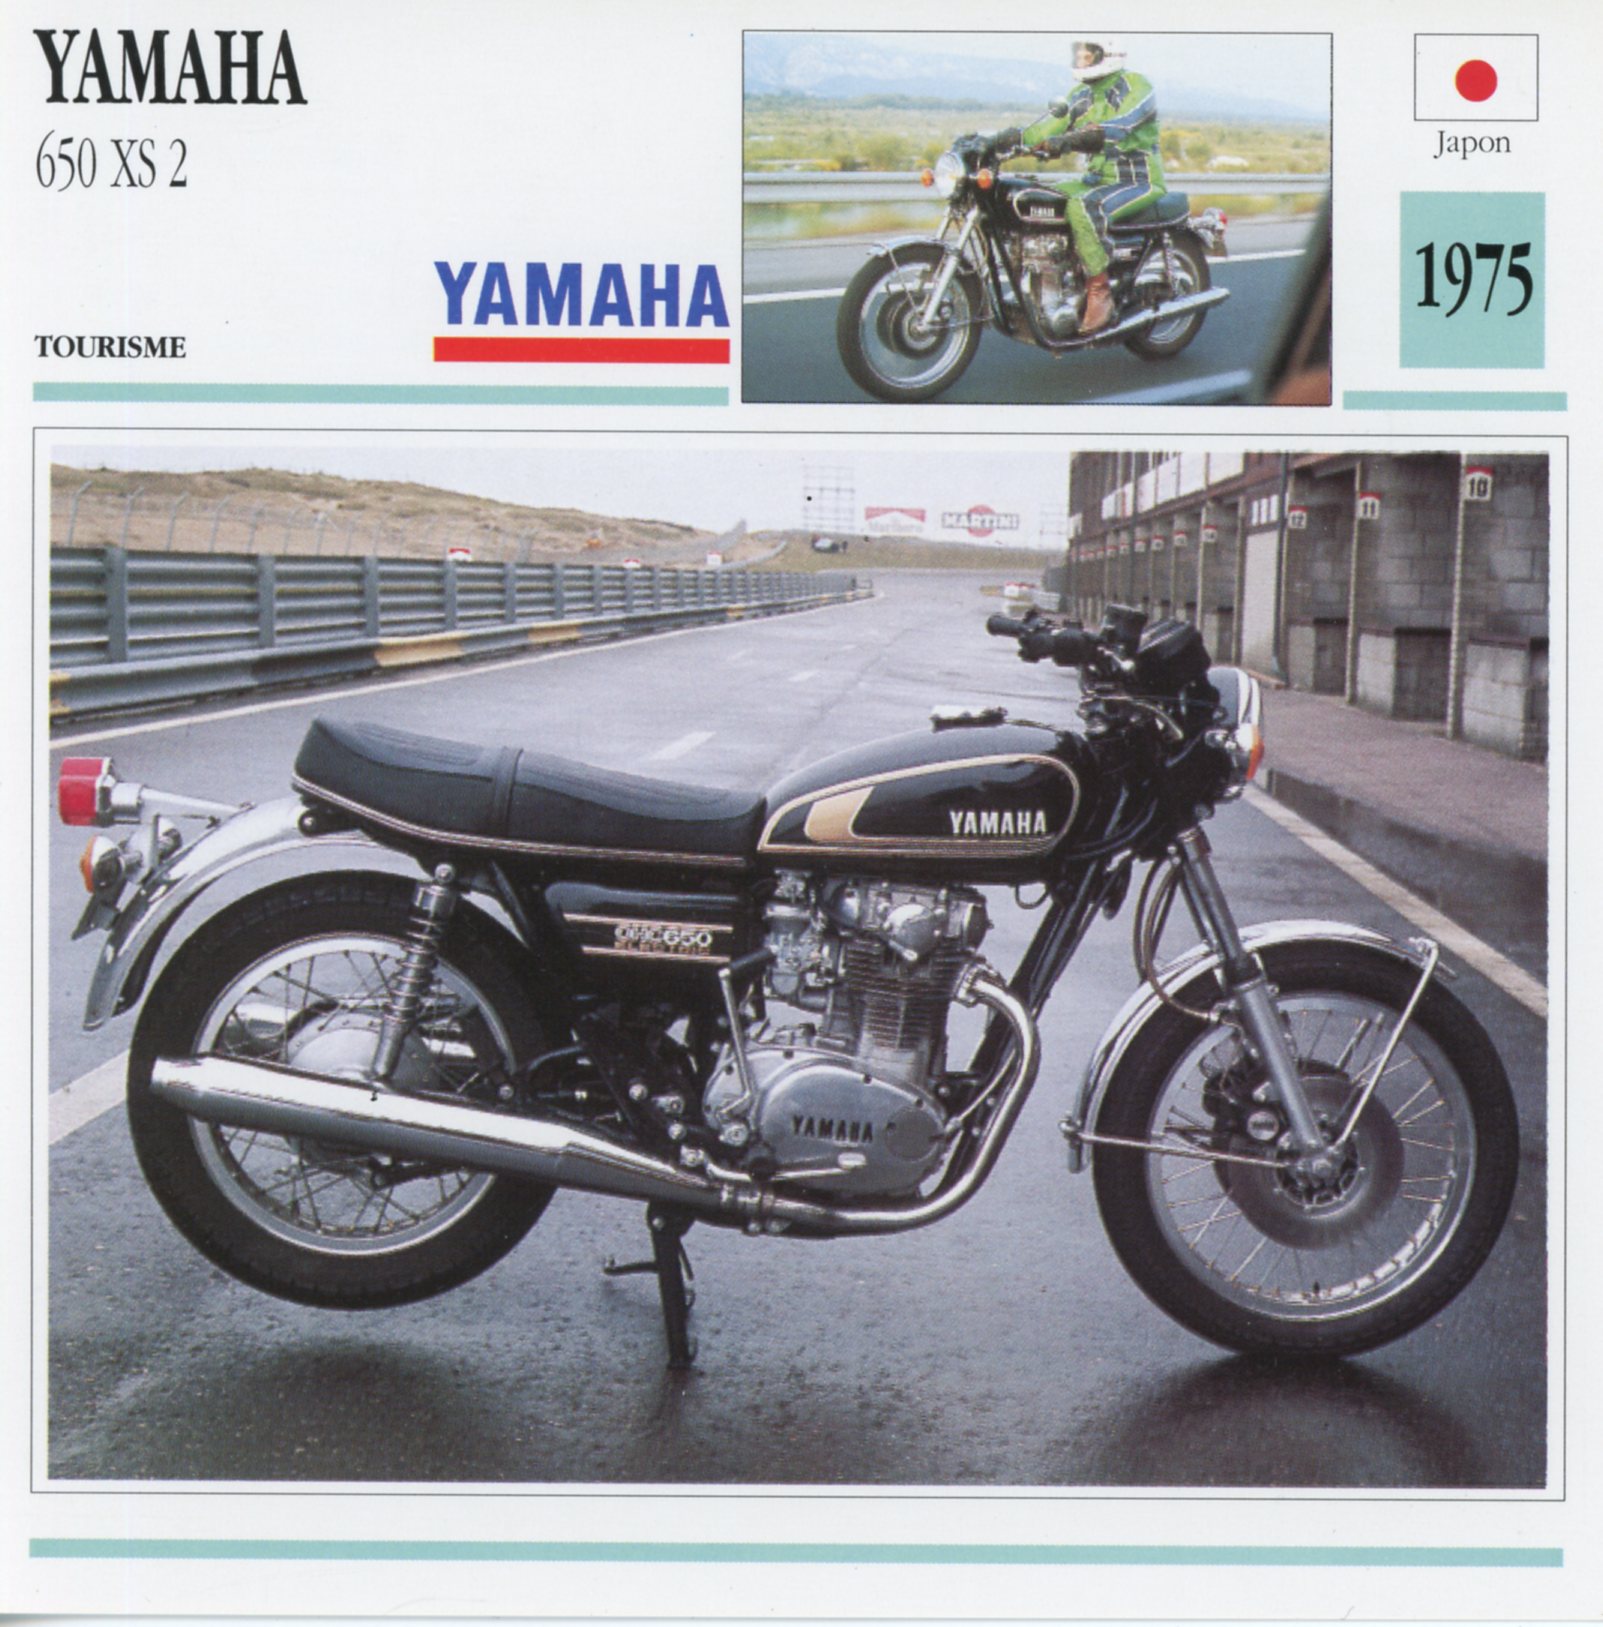 FICHE-MOTO-YAMAHA-XS-650-XS2-LEMASTERBROCKERS-littérature-brochure